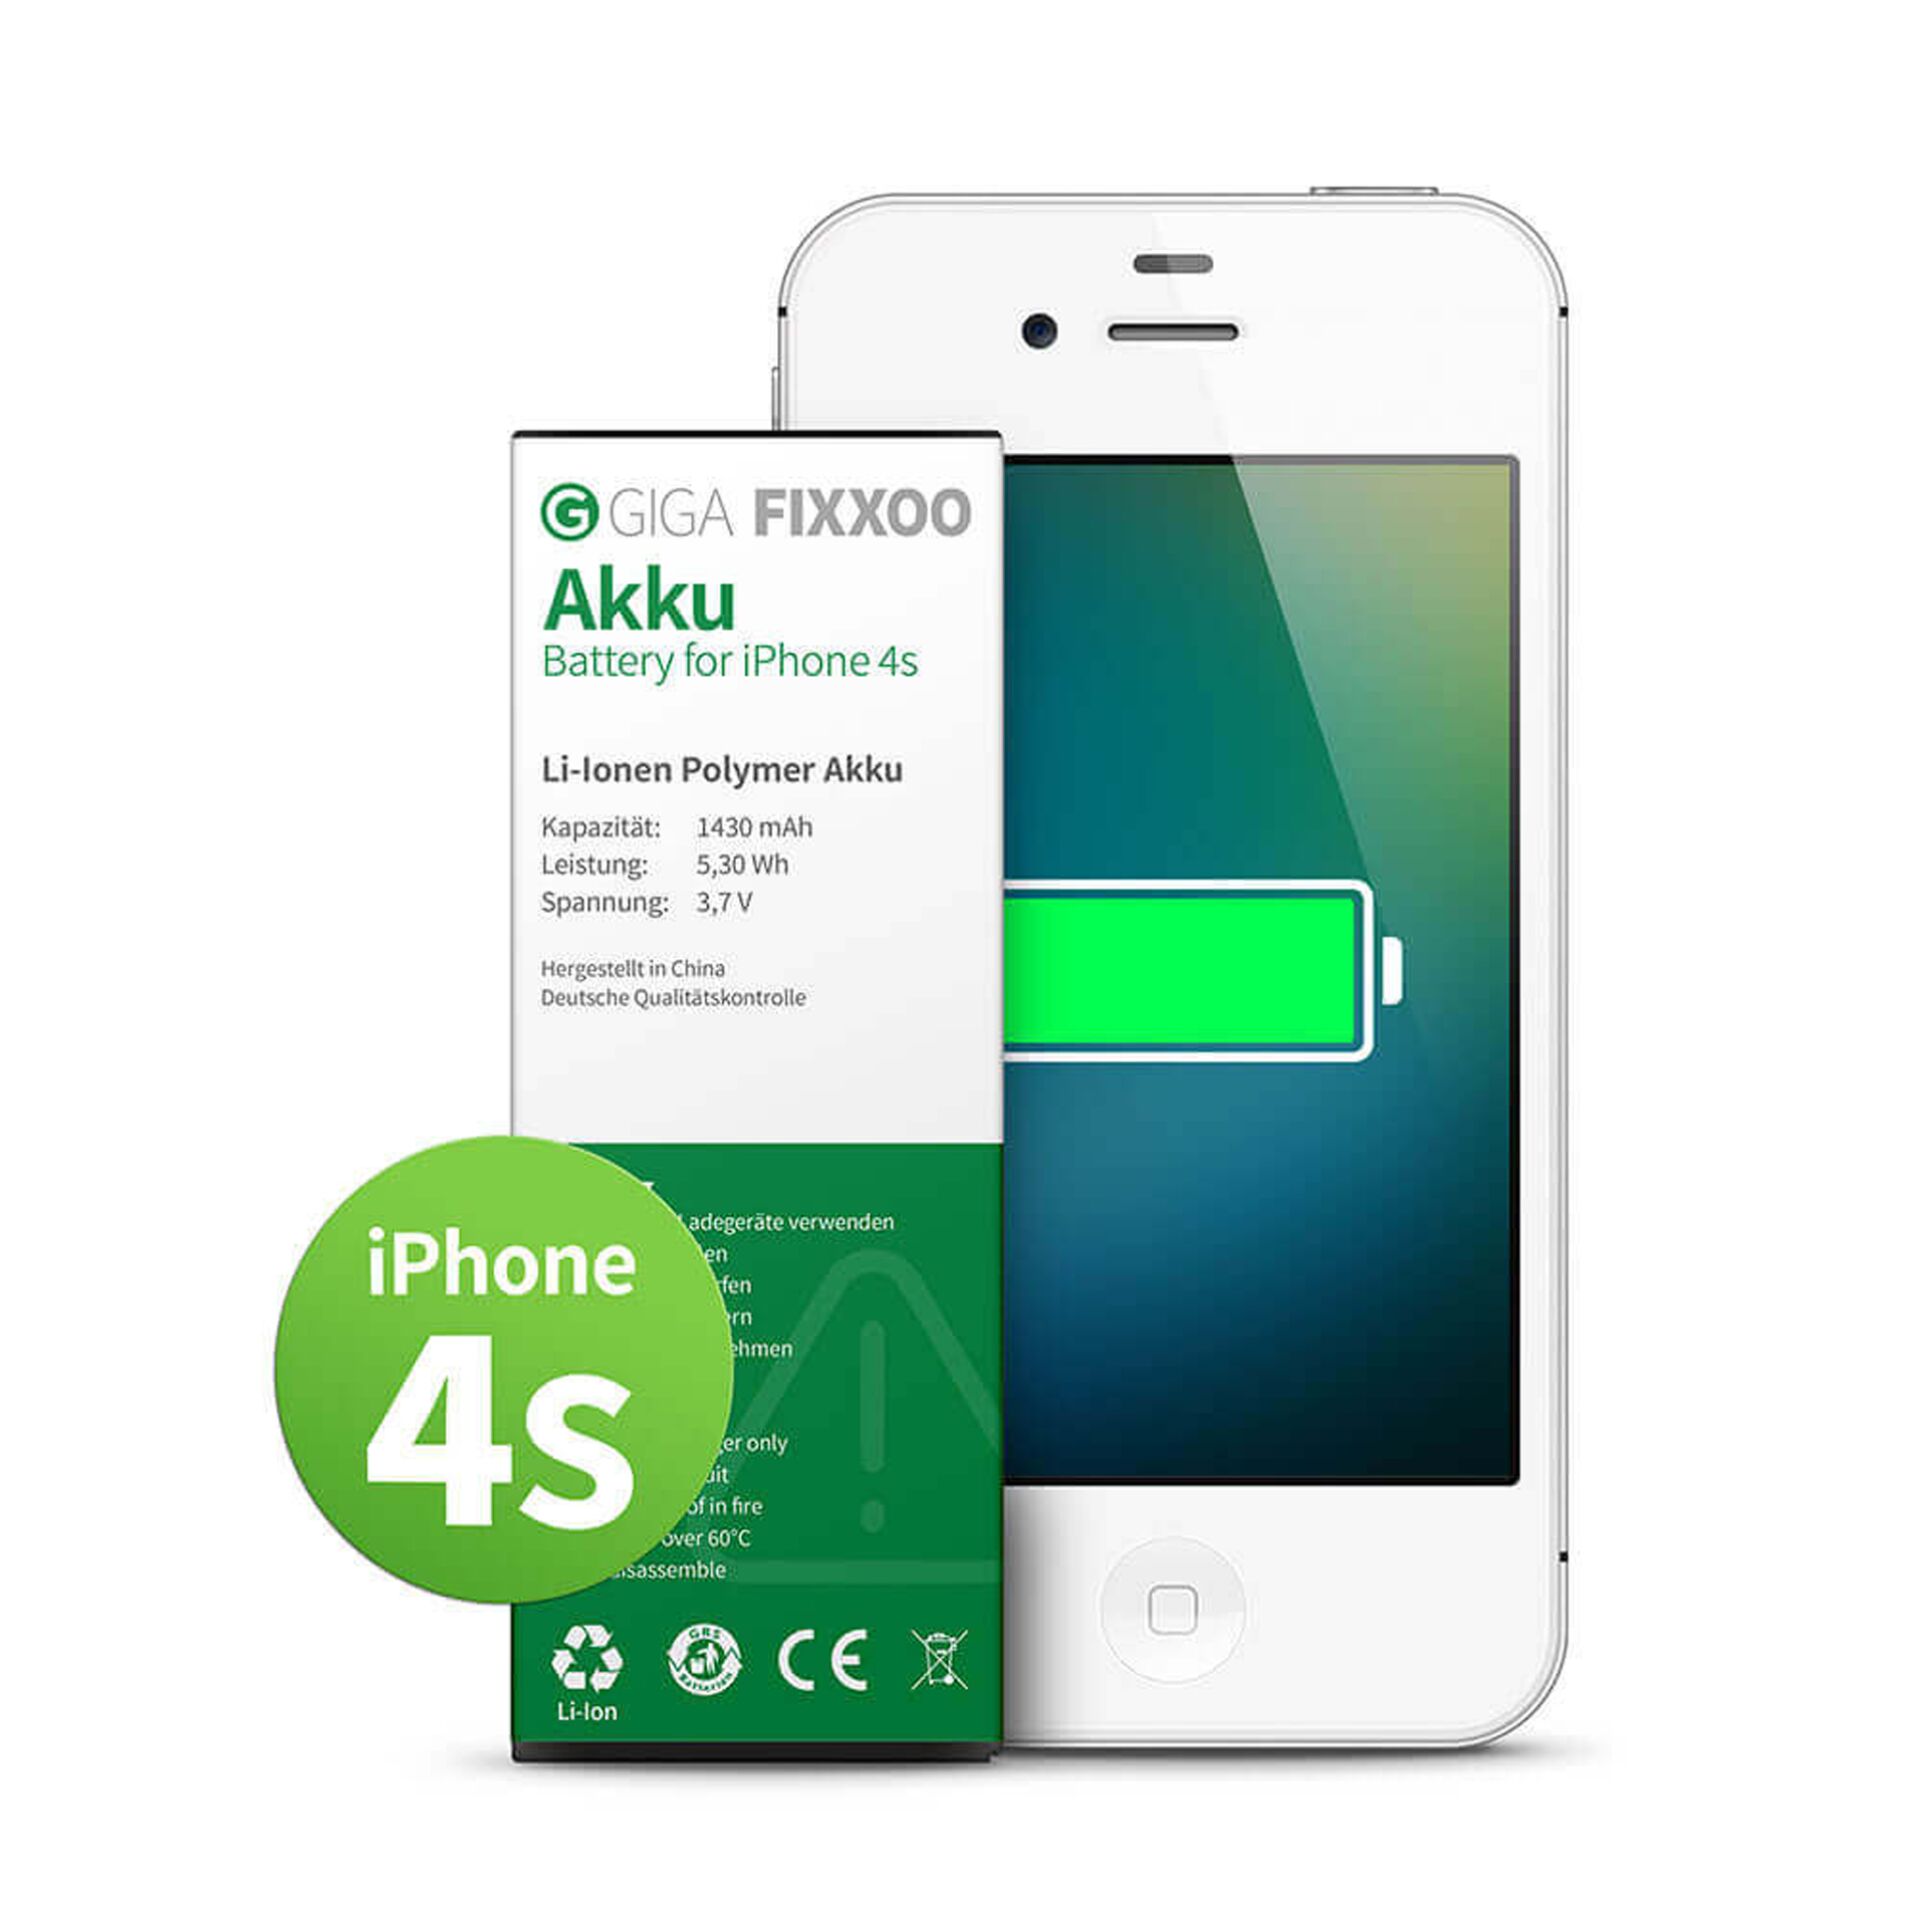 GIGA Fixxoo Akku - iPhone 4s incl. Einbau durch CSV! 